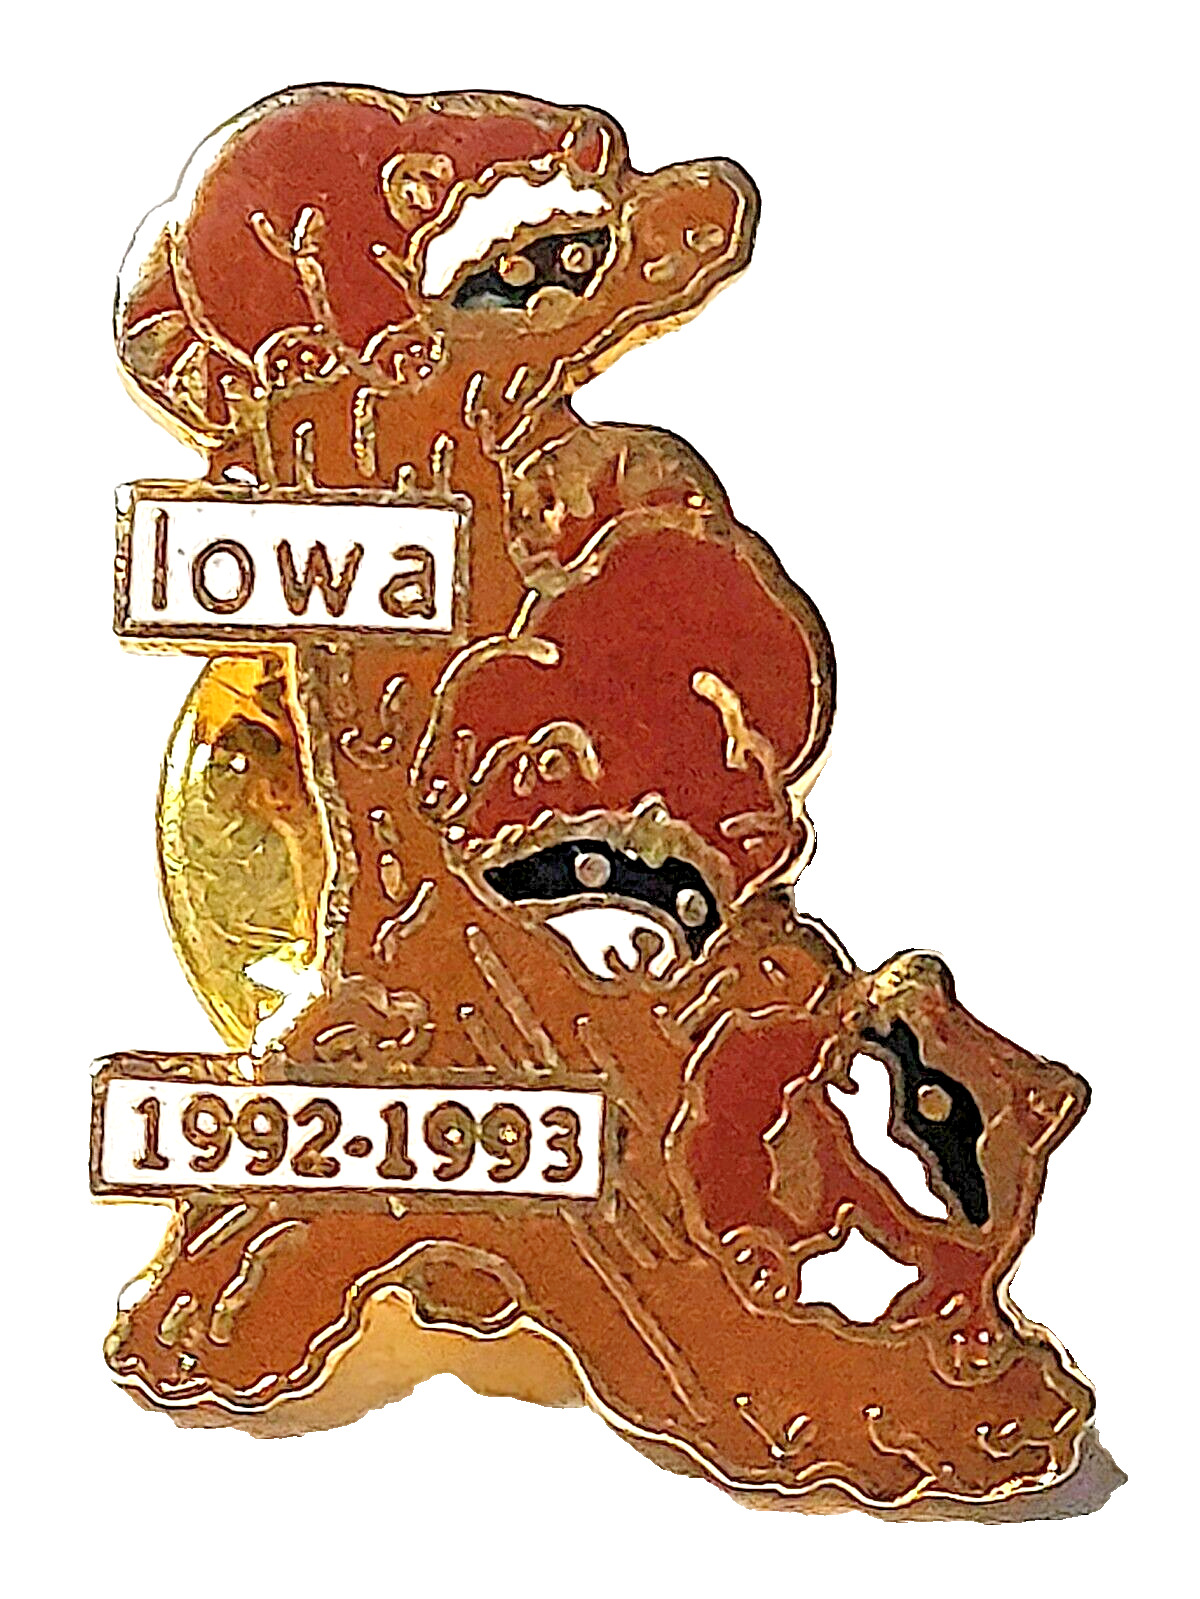 IOWA 1992-1993 Lapel Pin (100623)